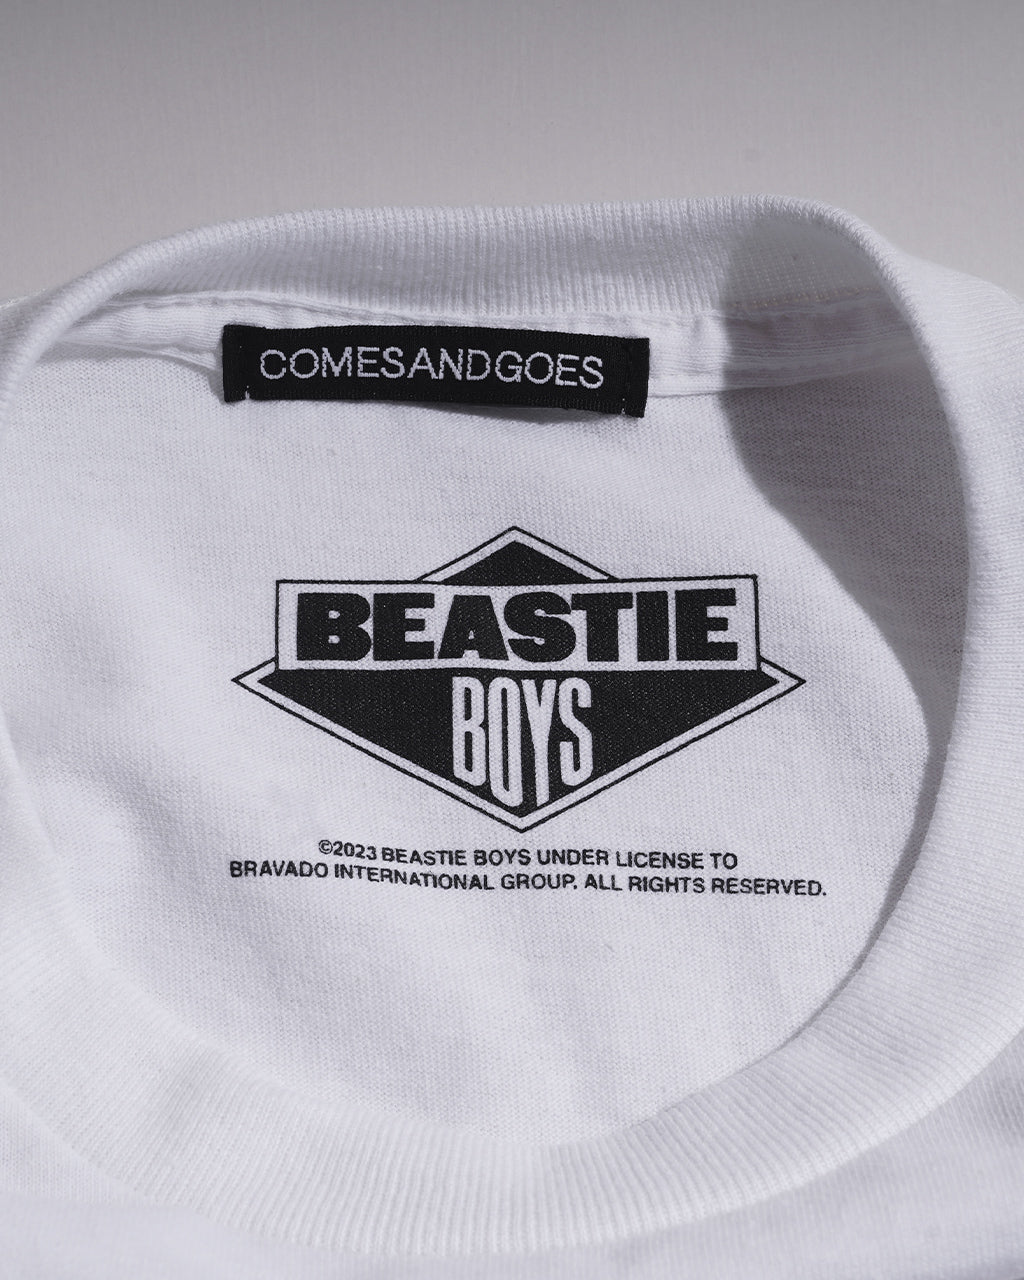 COMESANDGOES カムズアンドゴーズ ビースティー ボーイズ Tシャツ BEASTIE BOYS TEE(Hello Nasty) 24015 正規取扱店